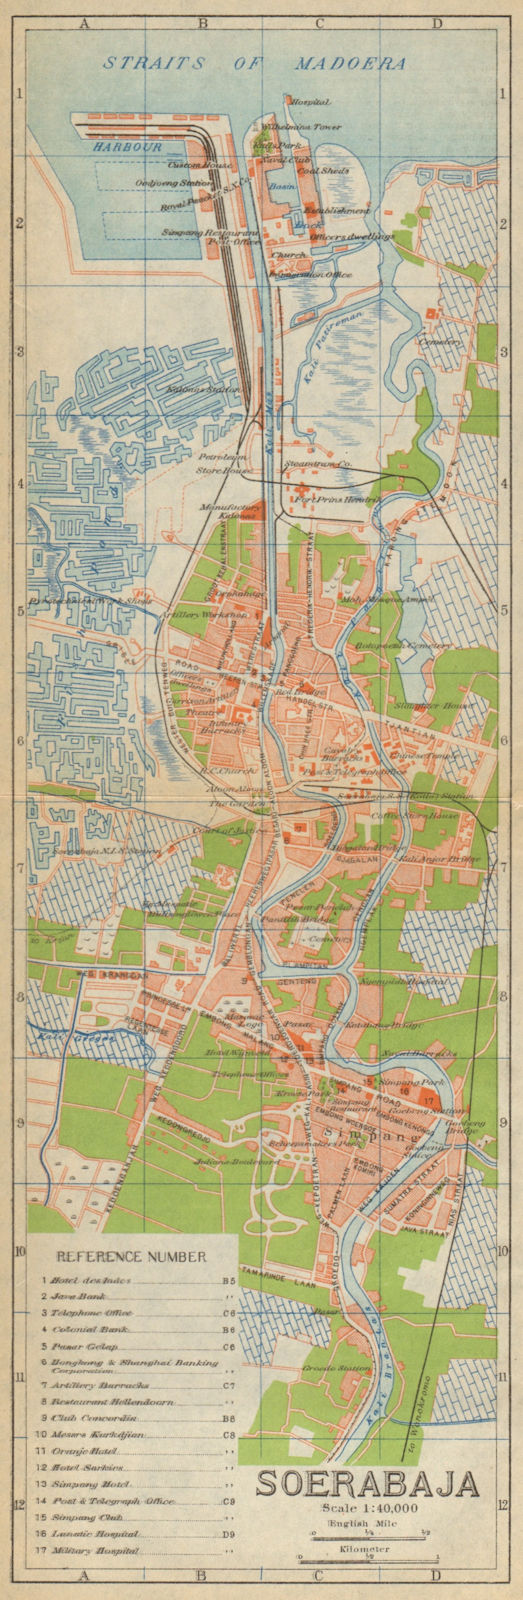 Surabaya antique town city plan. "Soerabaja". East Java, Indonesia 1920 map